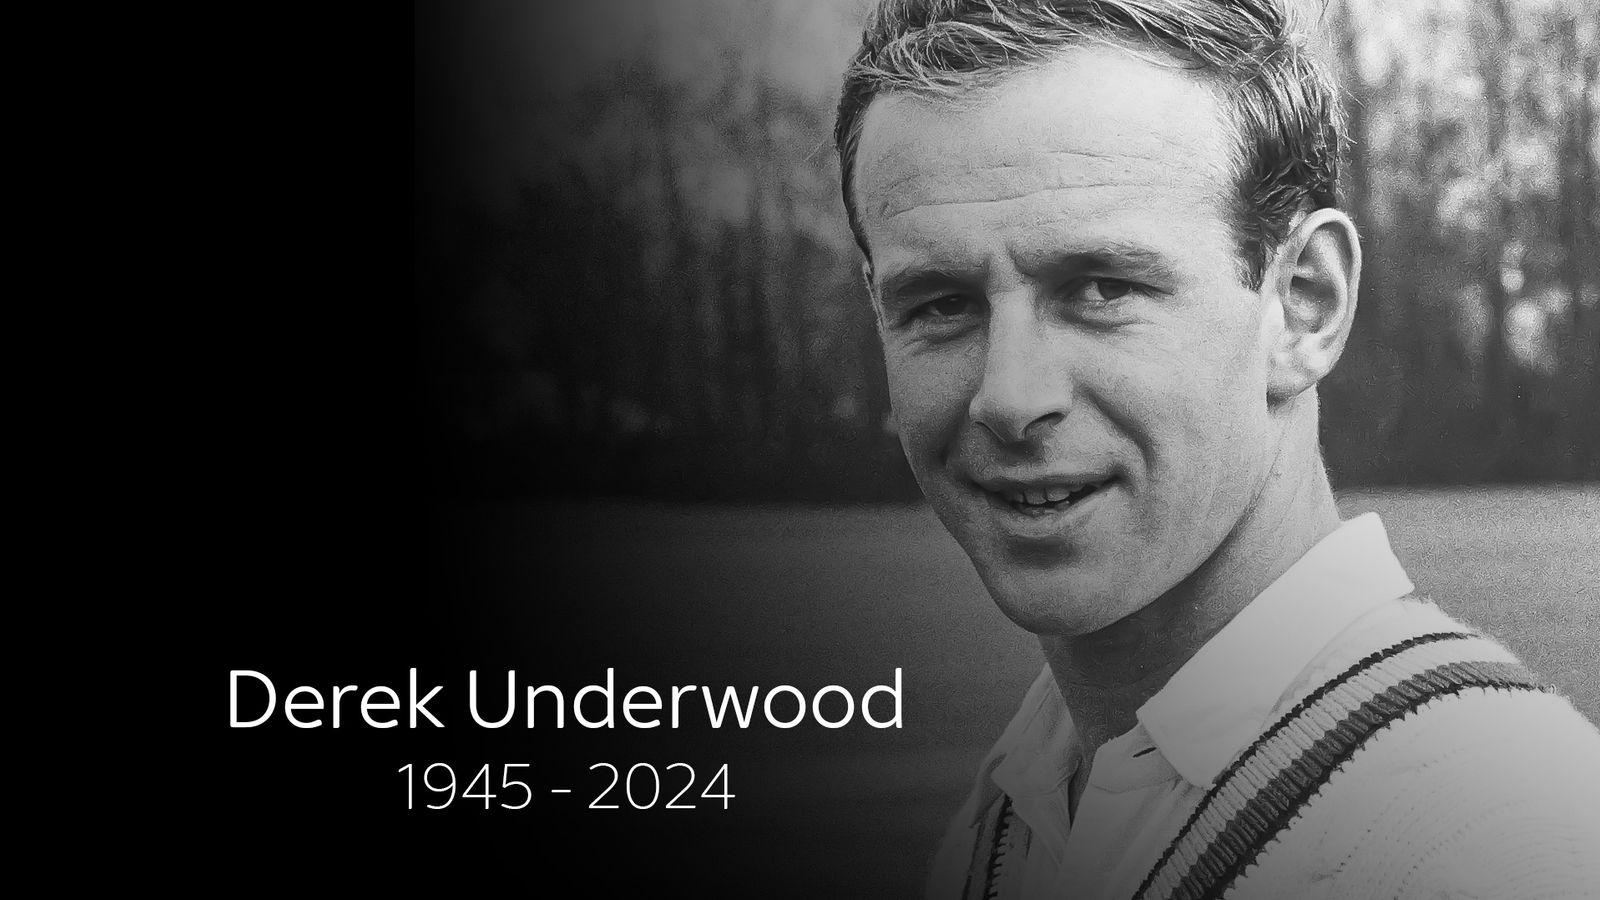 Derek Underwood: Former England and Kent spinner dies aged 78